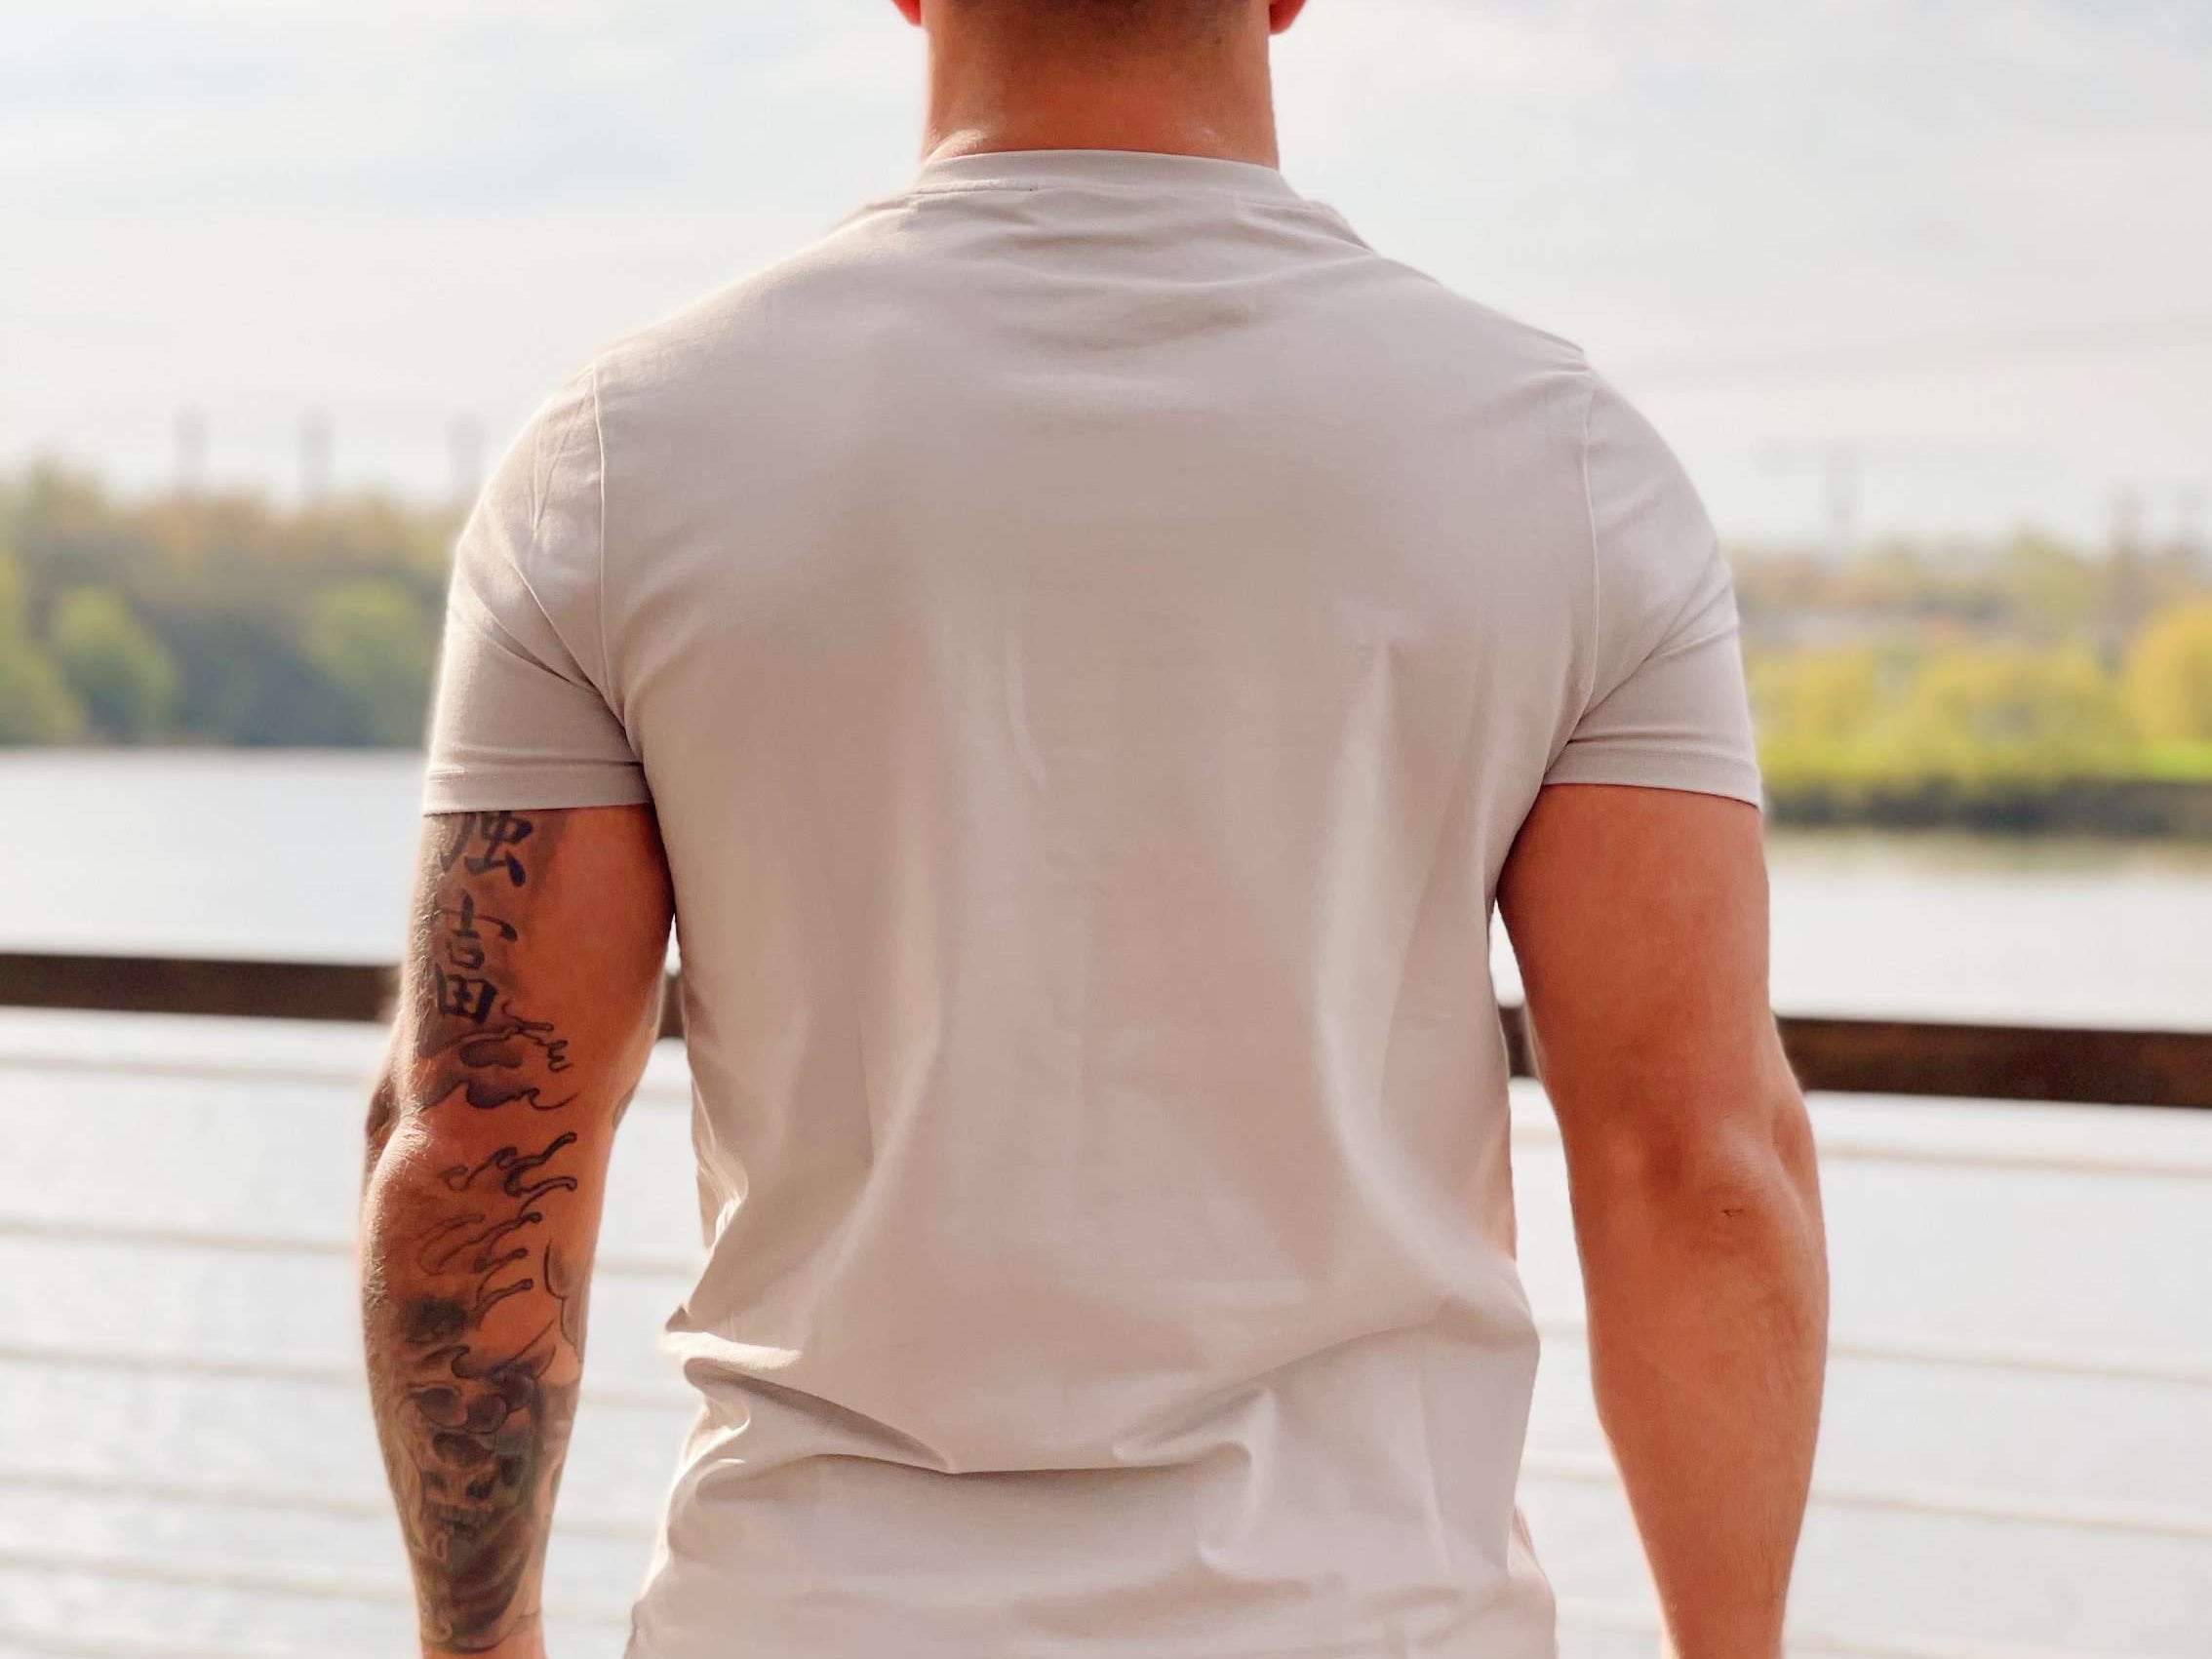 Creamyski - Creamy Short Sleeves T-Shirt for Men (PRE-ORDER DISPATCH DATE 1 JULY 2022) - Sarman Fashion - Wholesale Clothing Fashion Brand for Men from Canada